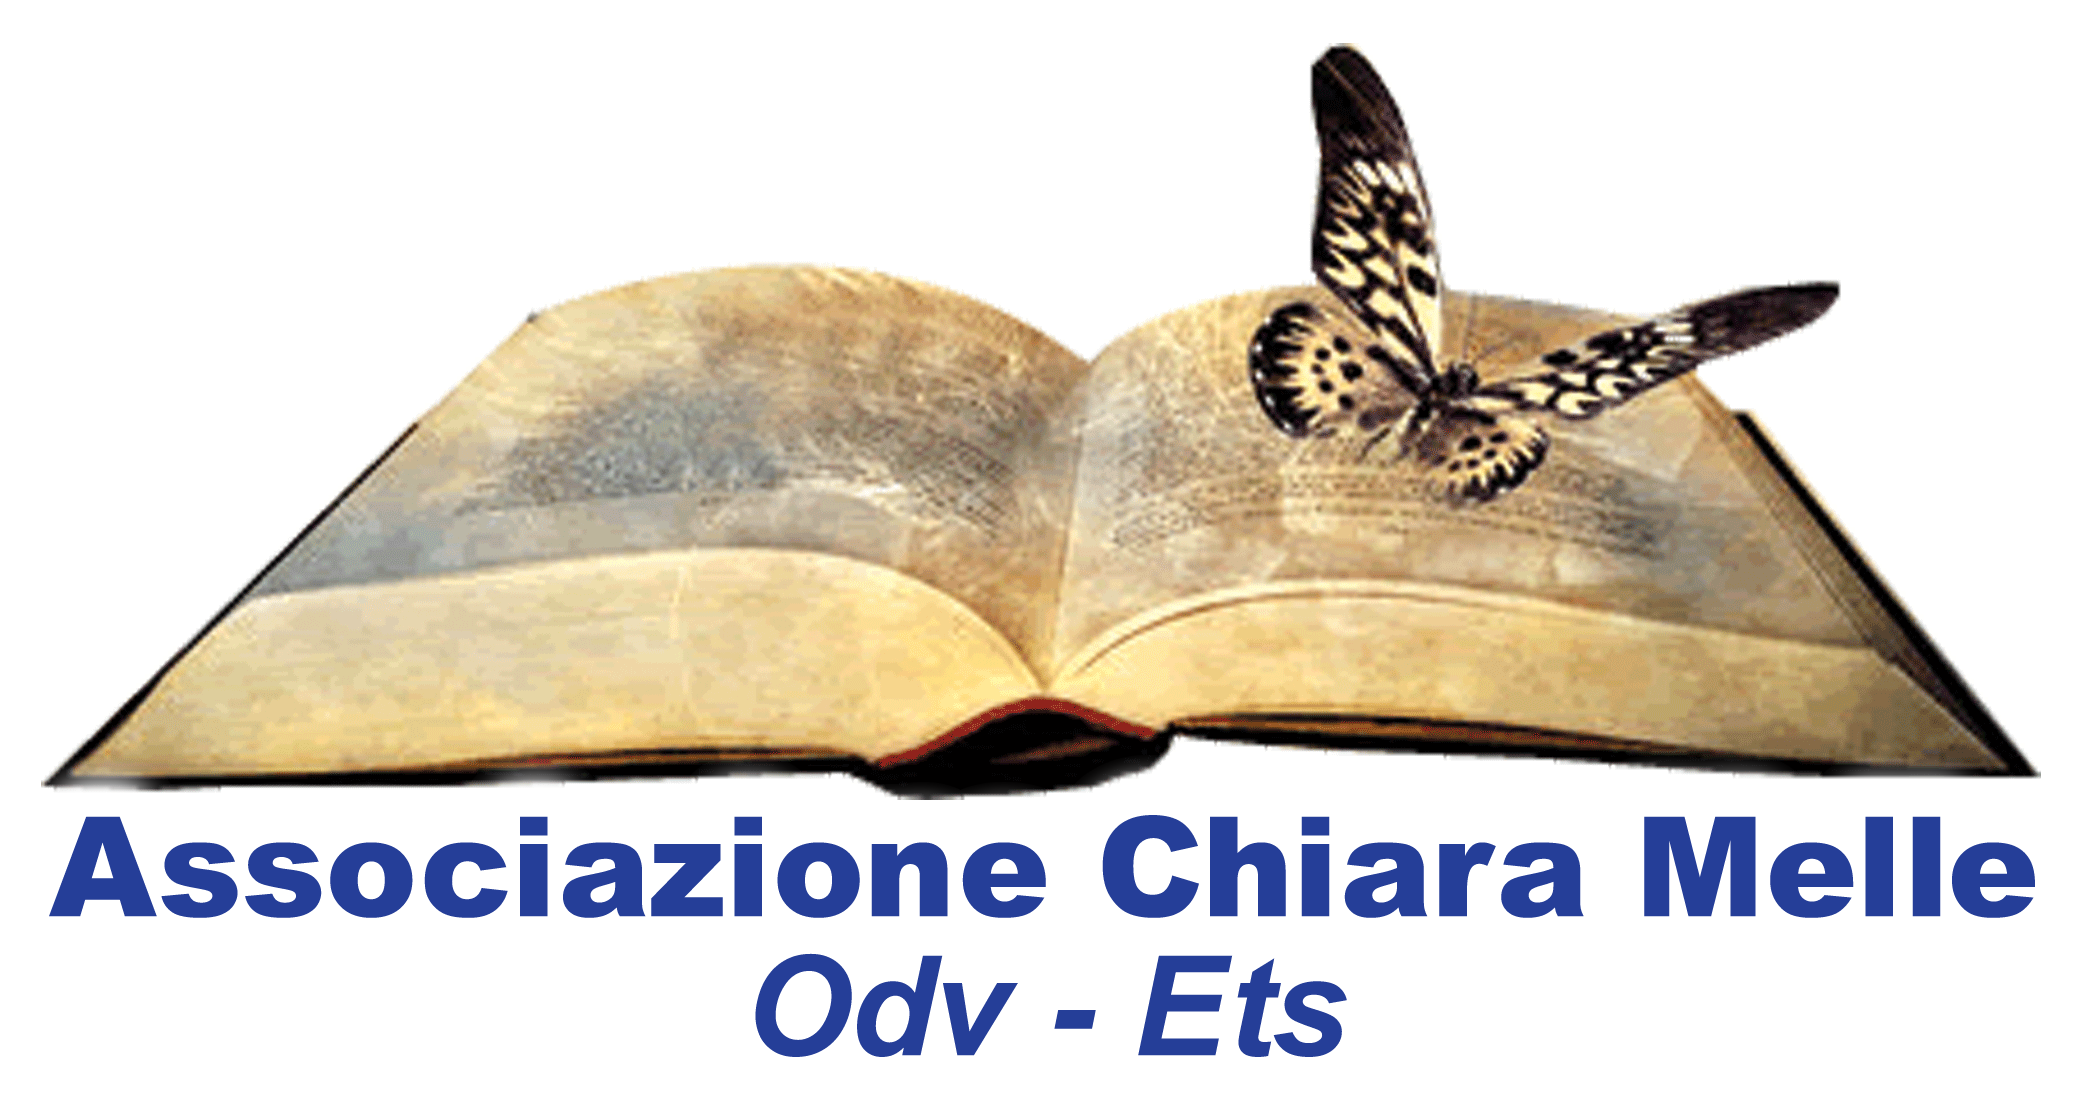 Associazione Chiara Odv Ets